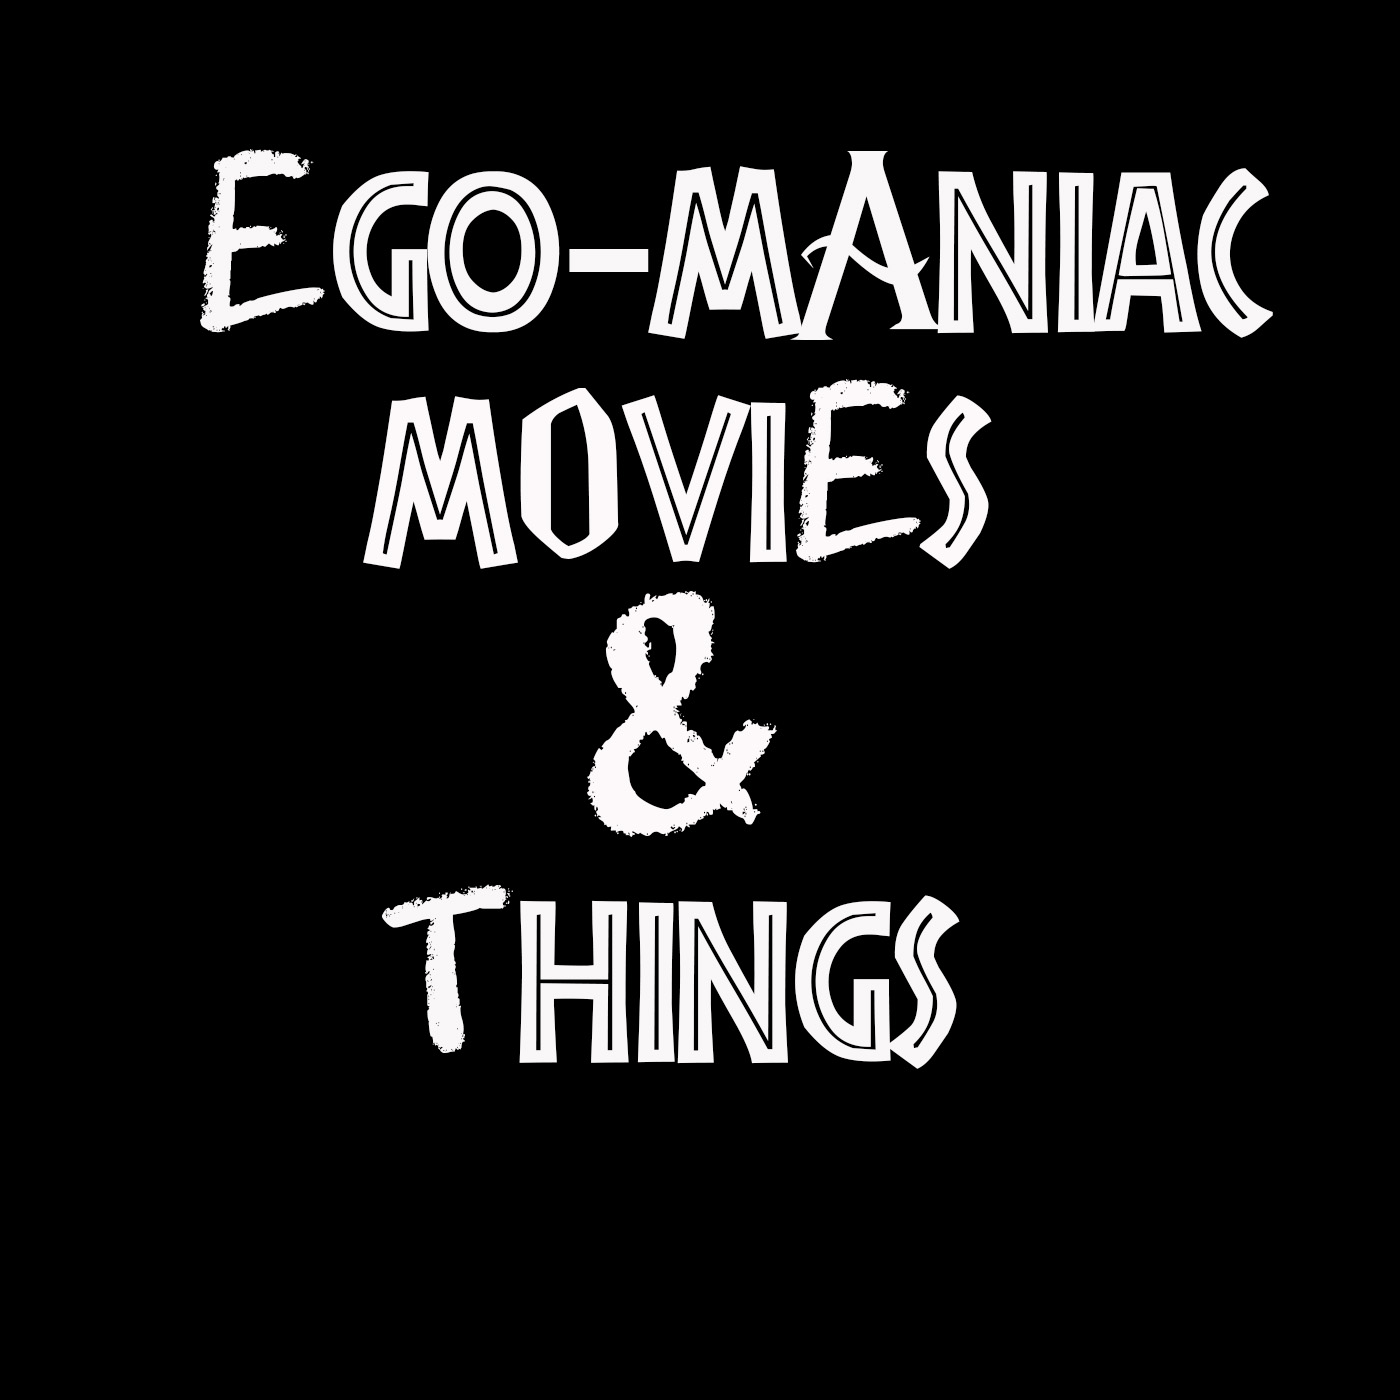 EGO-MANIAC MOVIES